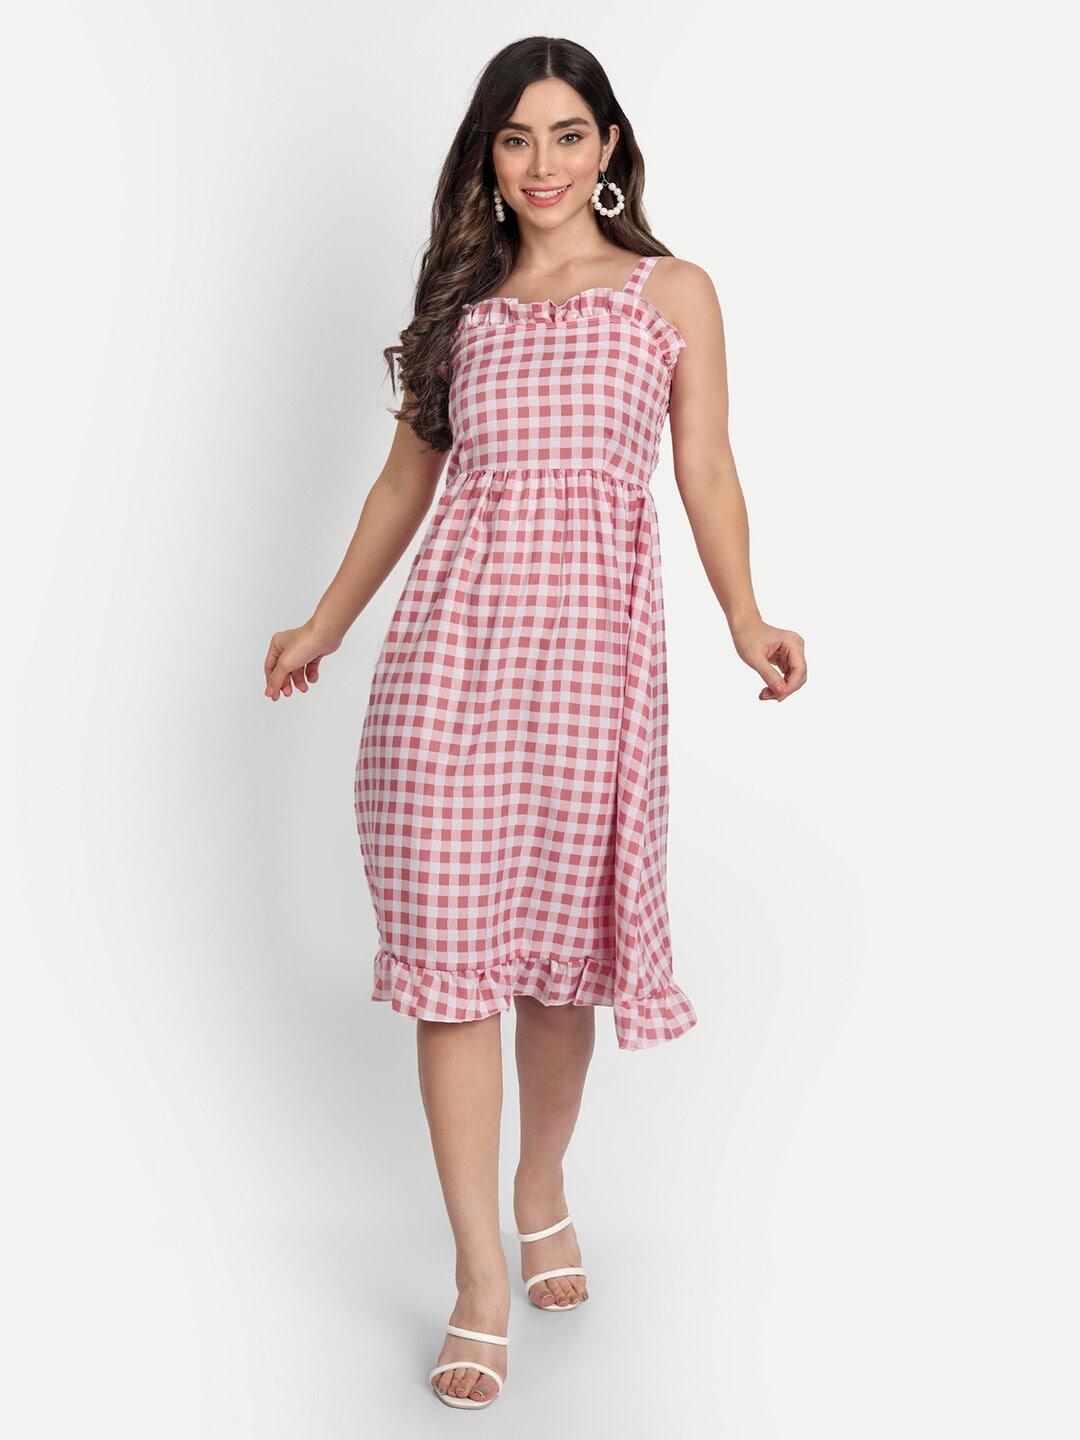 gufrina peach-coloured checked dress